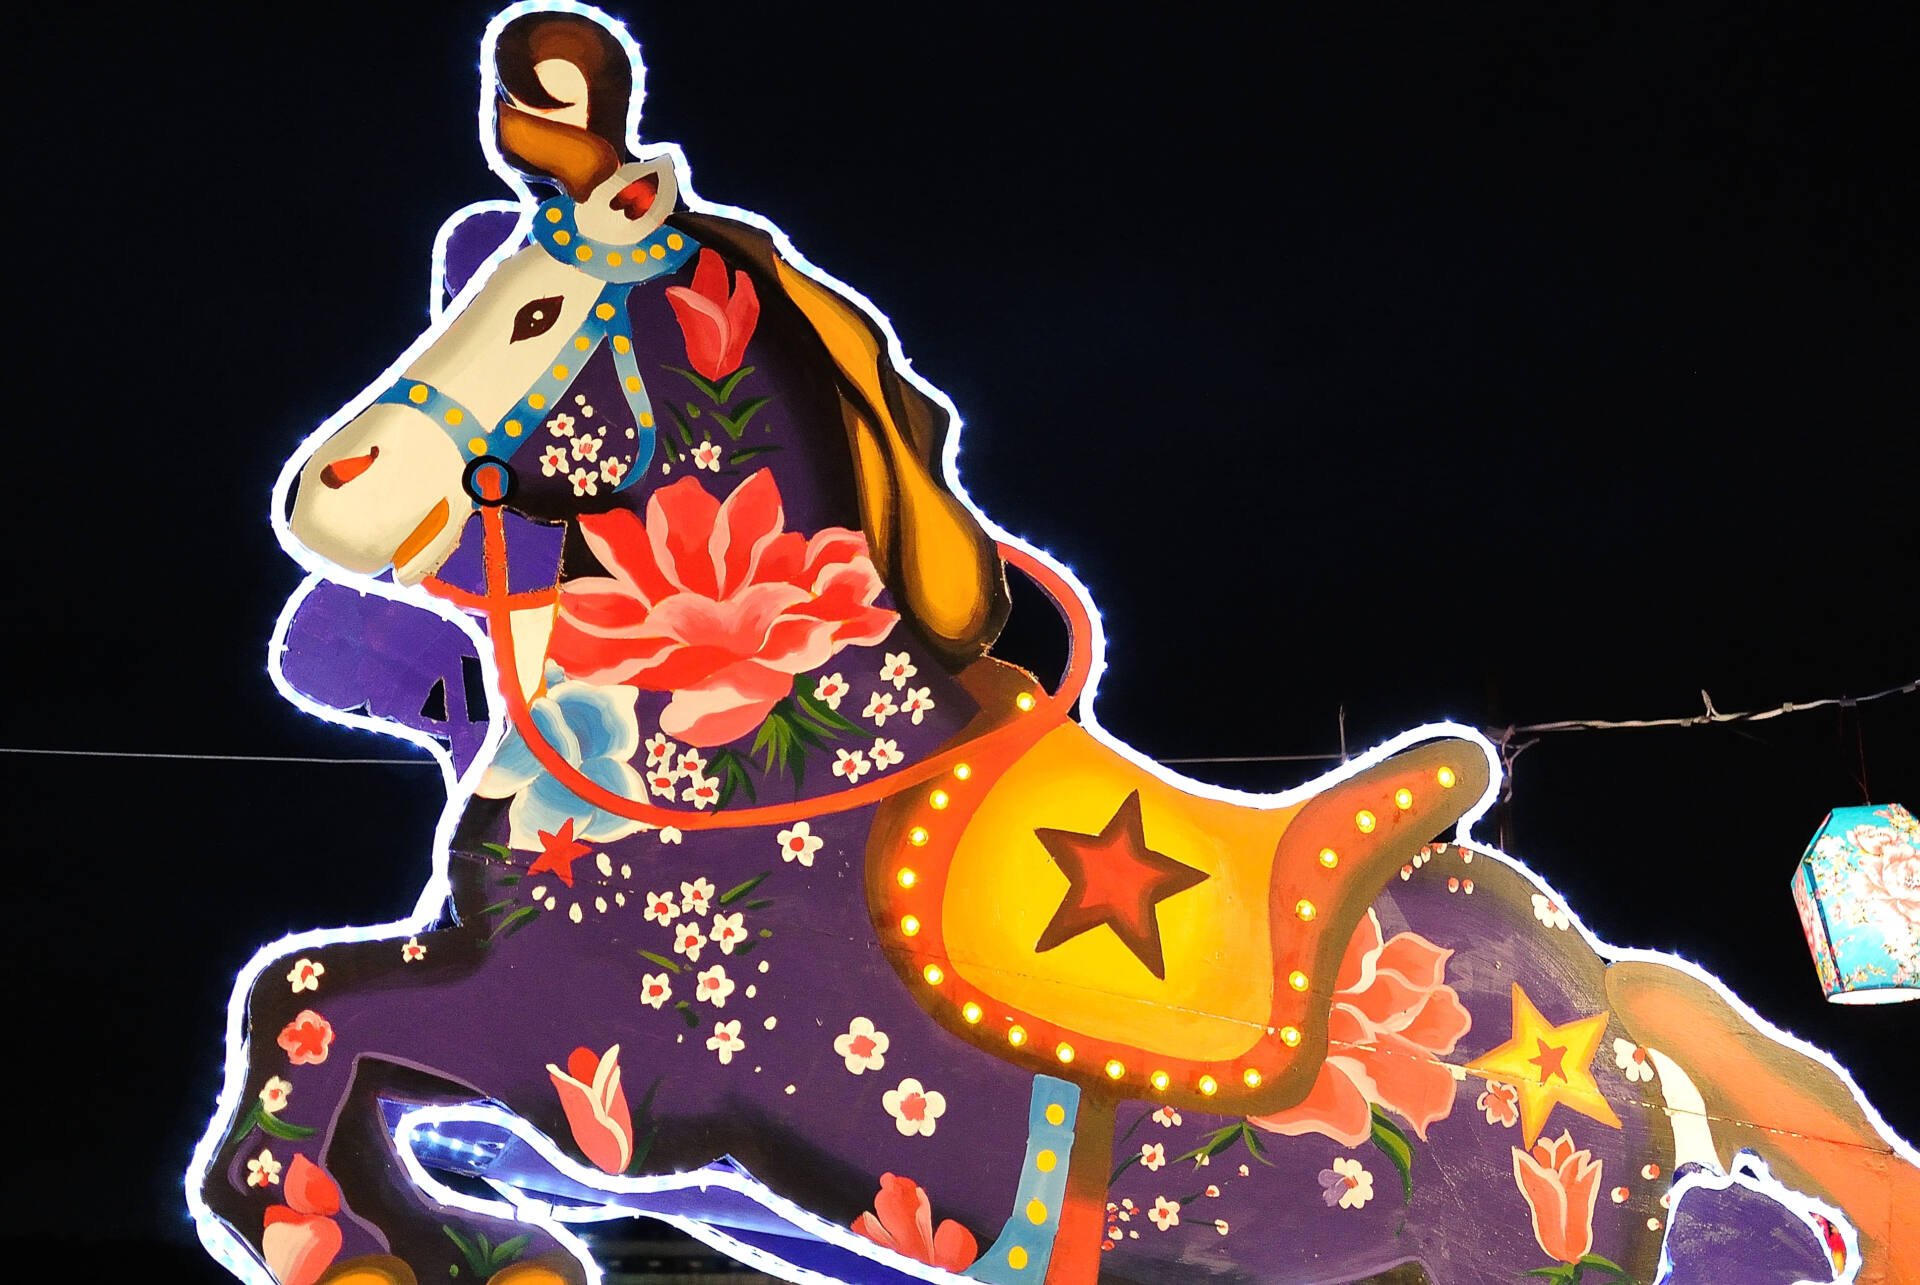 Ano novo chinês 2014 “Ano do Cavalo” por pang yu liu